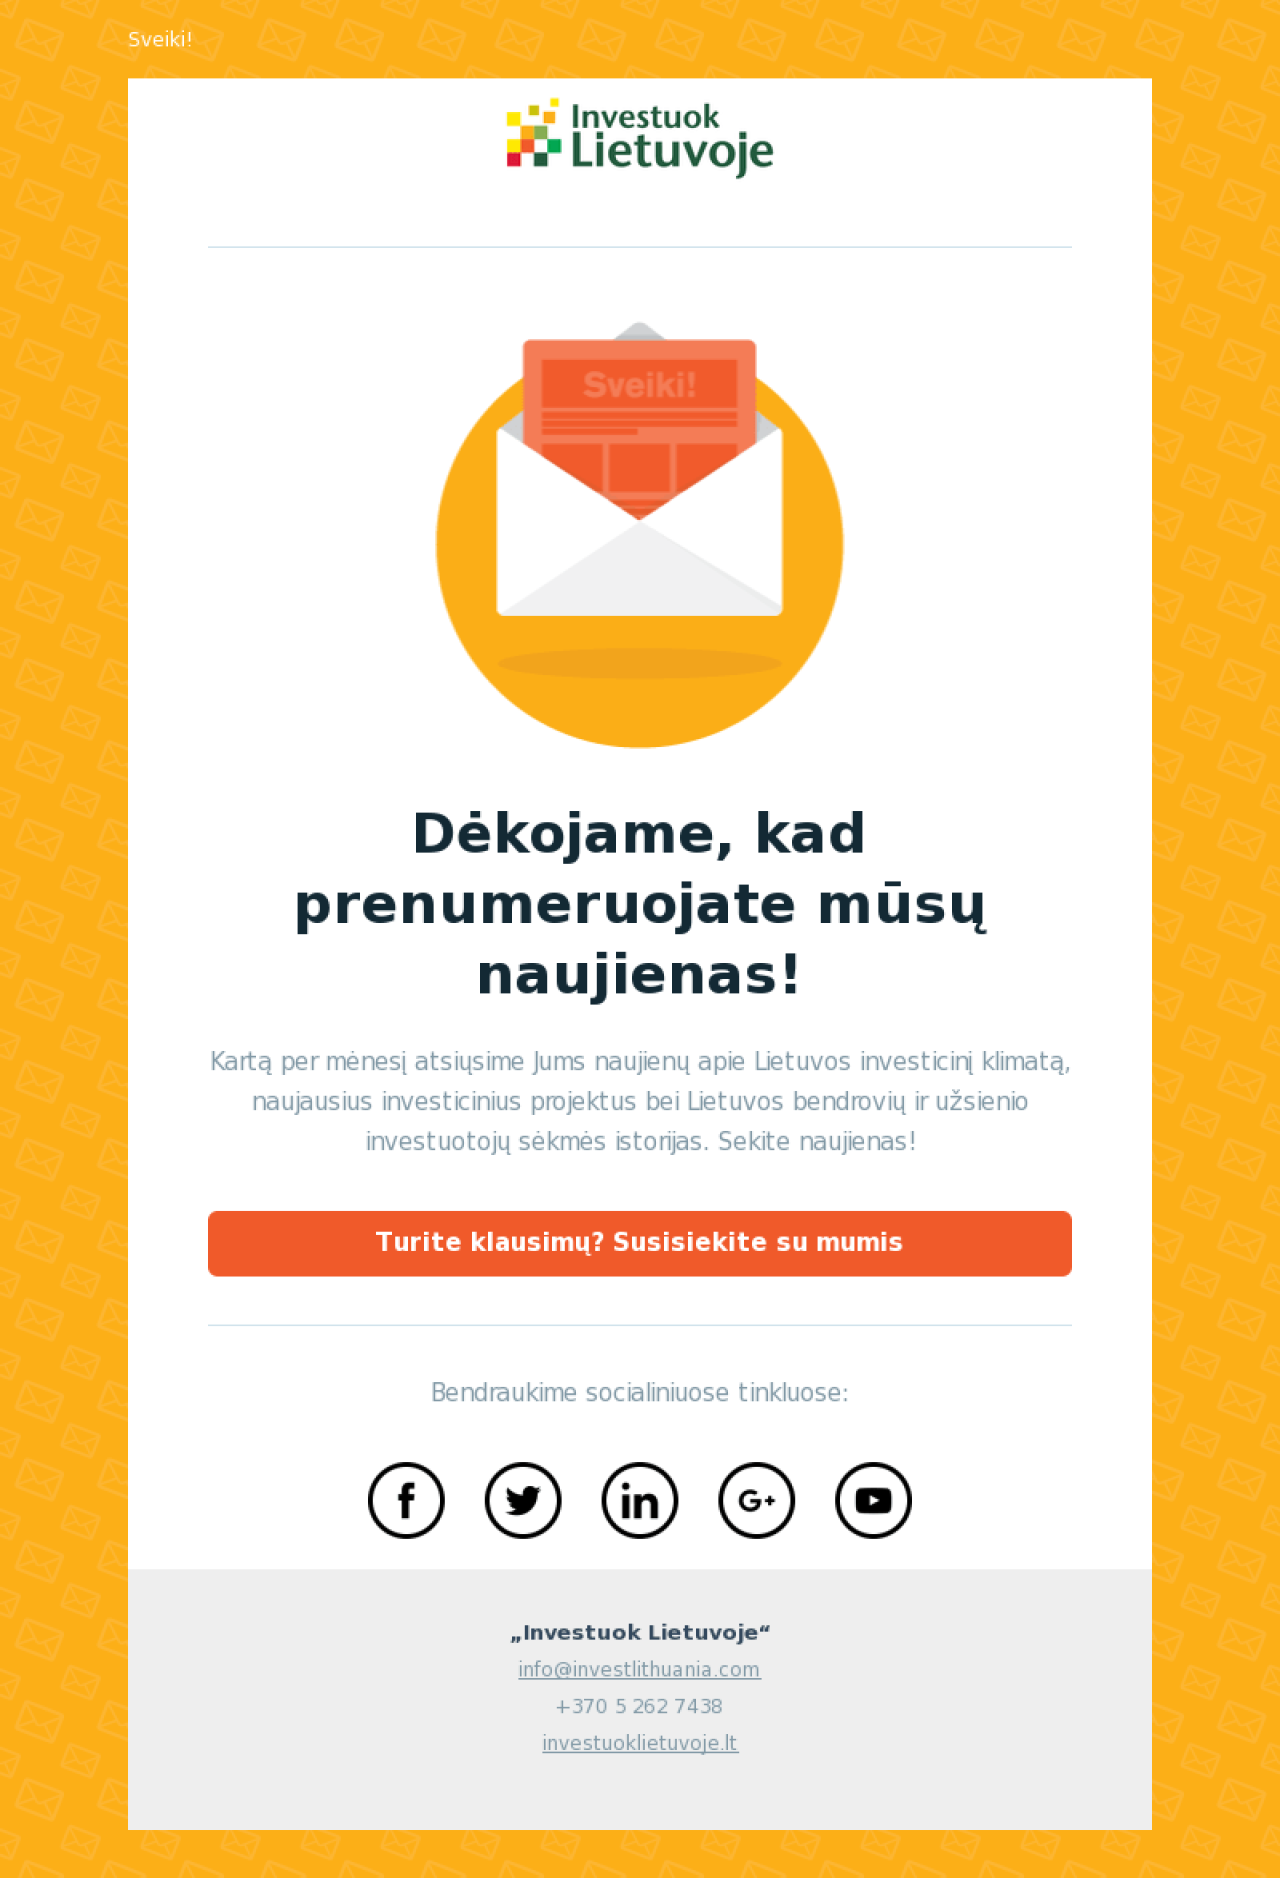 Investuok Lietuvoje example - Made with MailerLite